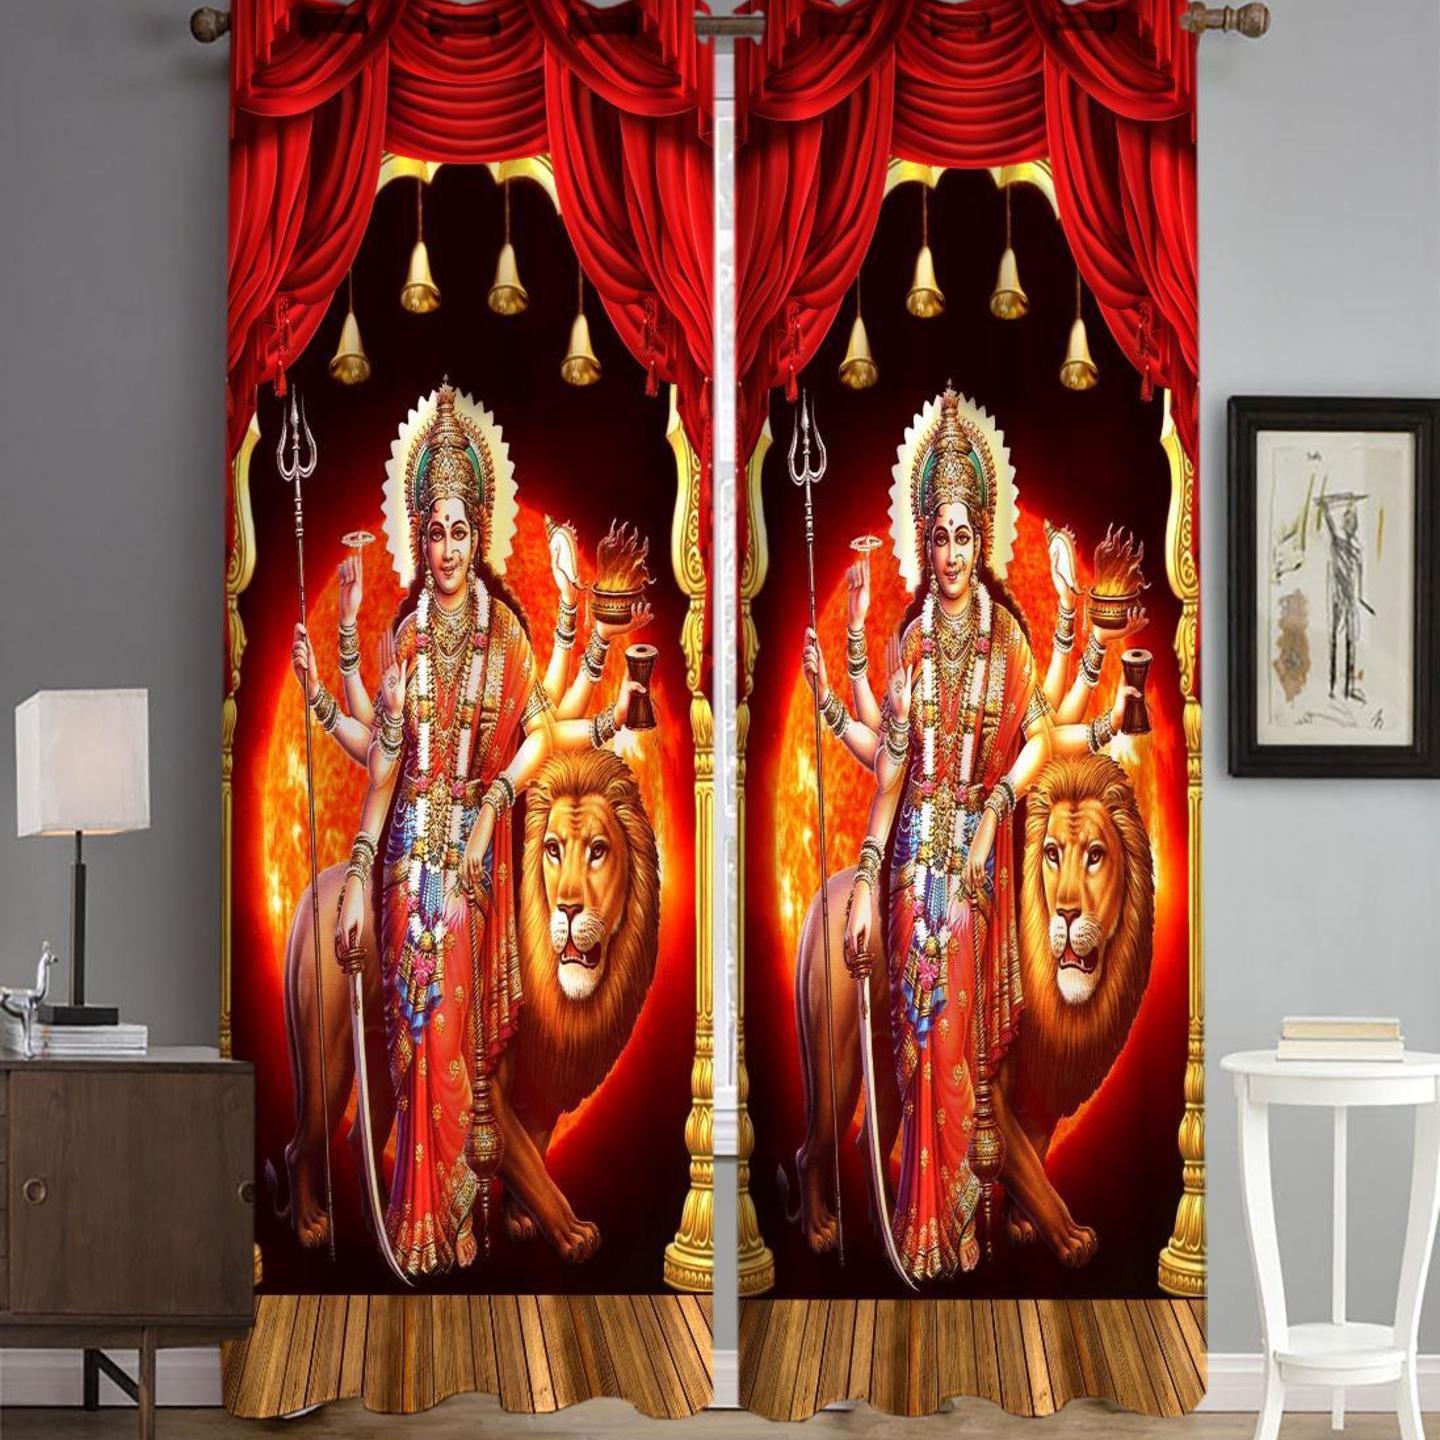 Handtex Home Polyester 3D God MATA Rani Digital Printed Curtain Solid 2 Pecs Multicolour (Door Size 4 x 7 Feet)